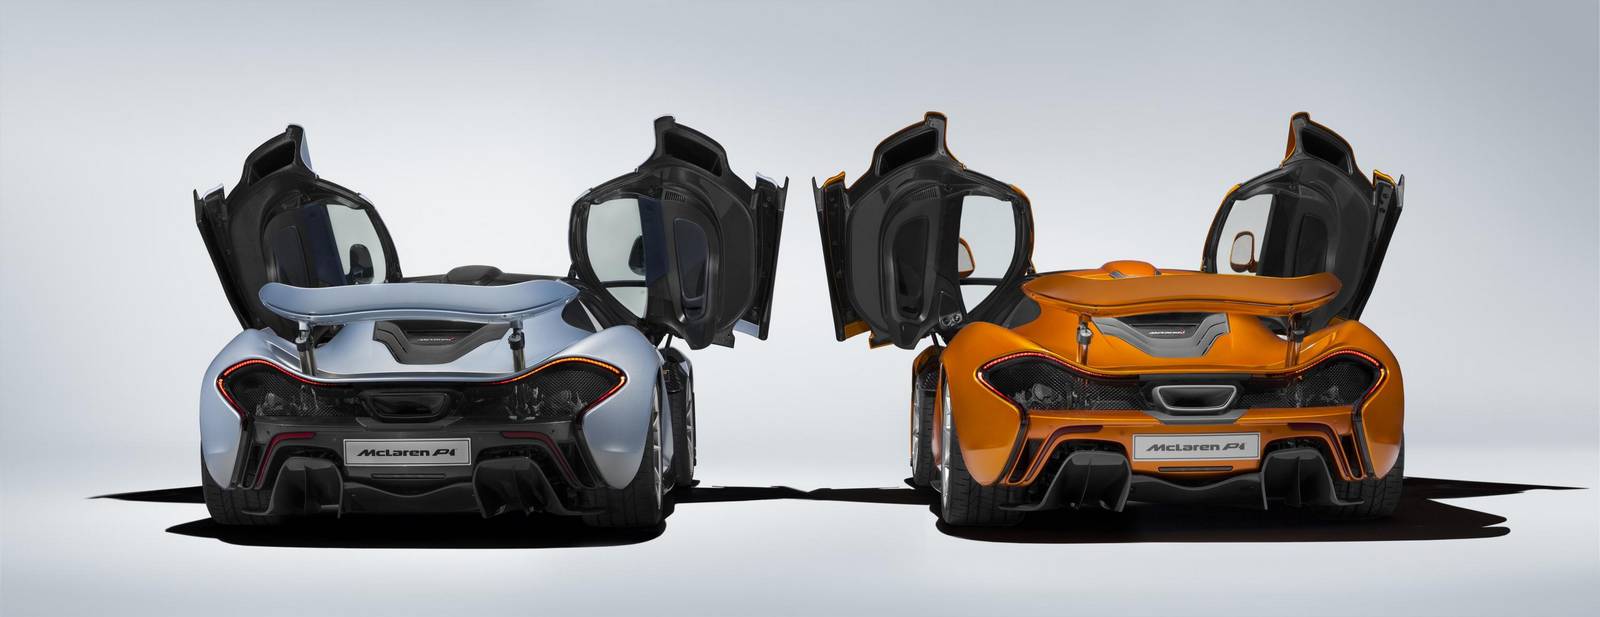 McLaren cars